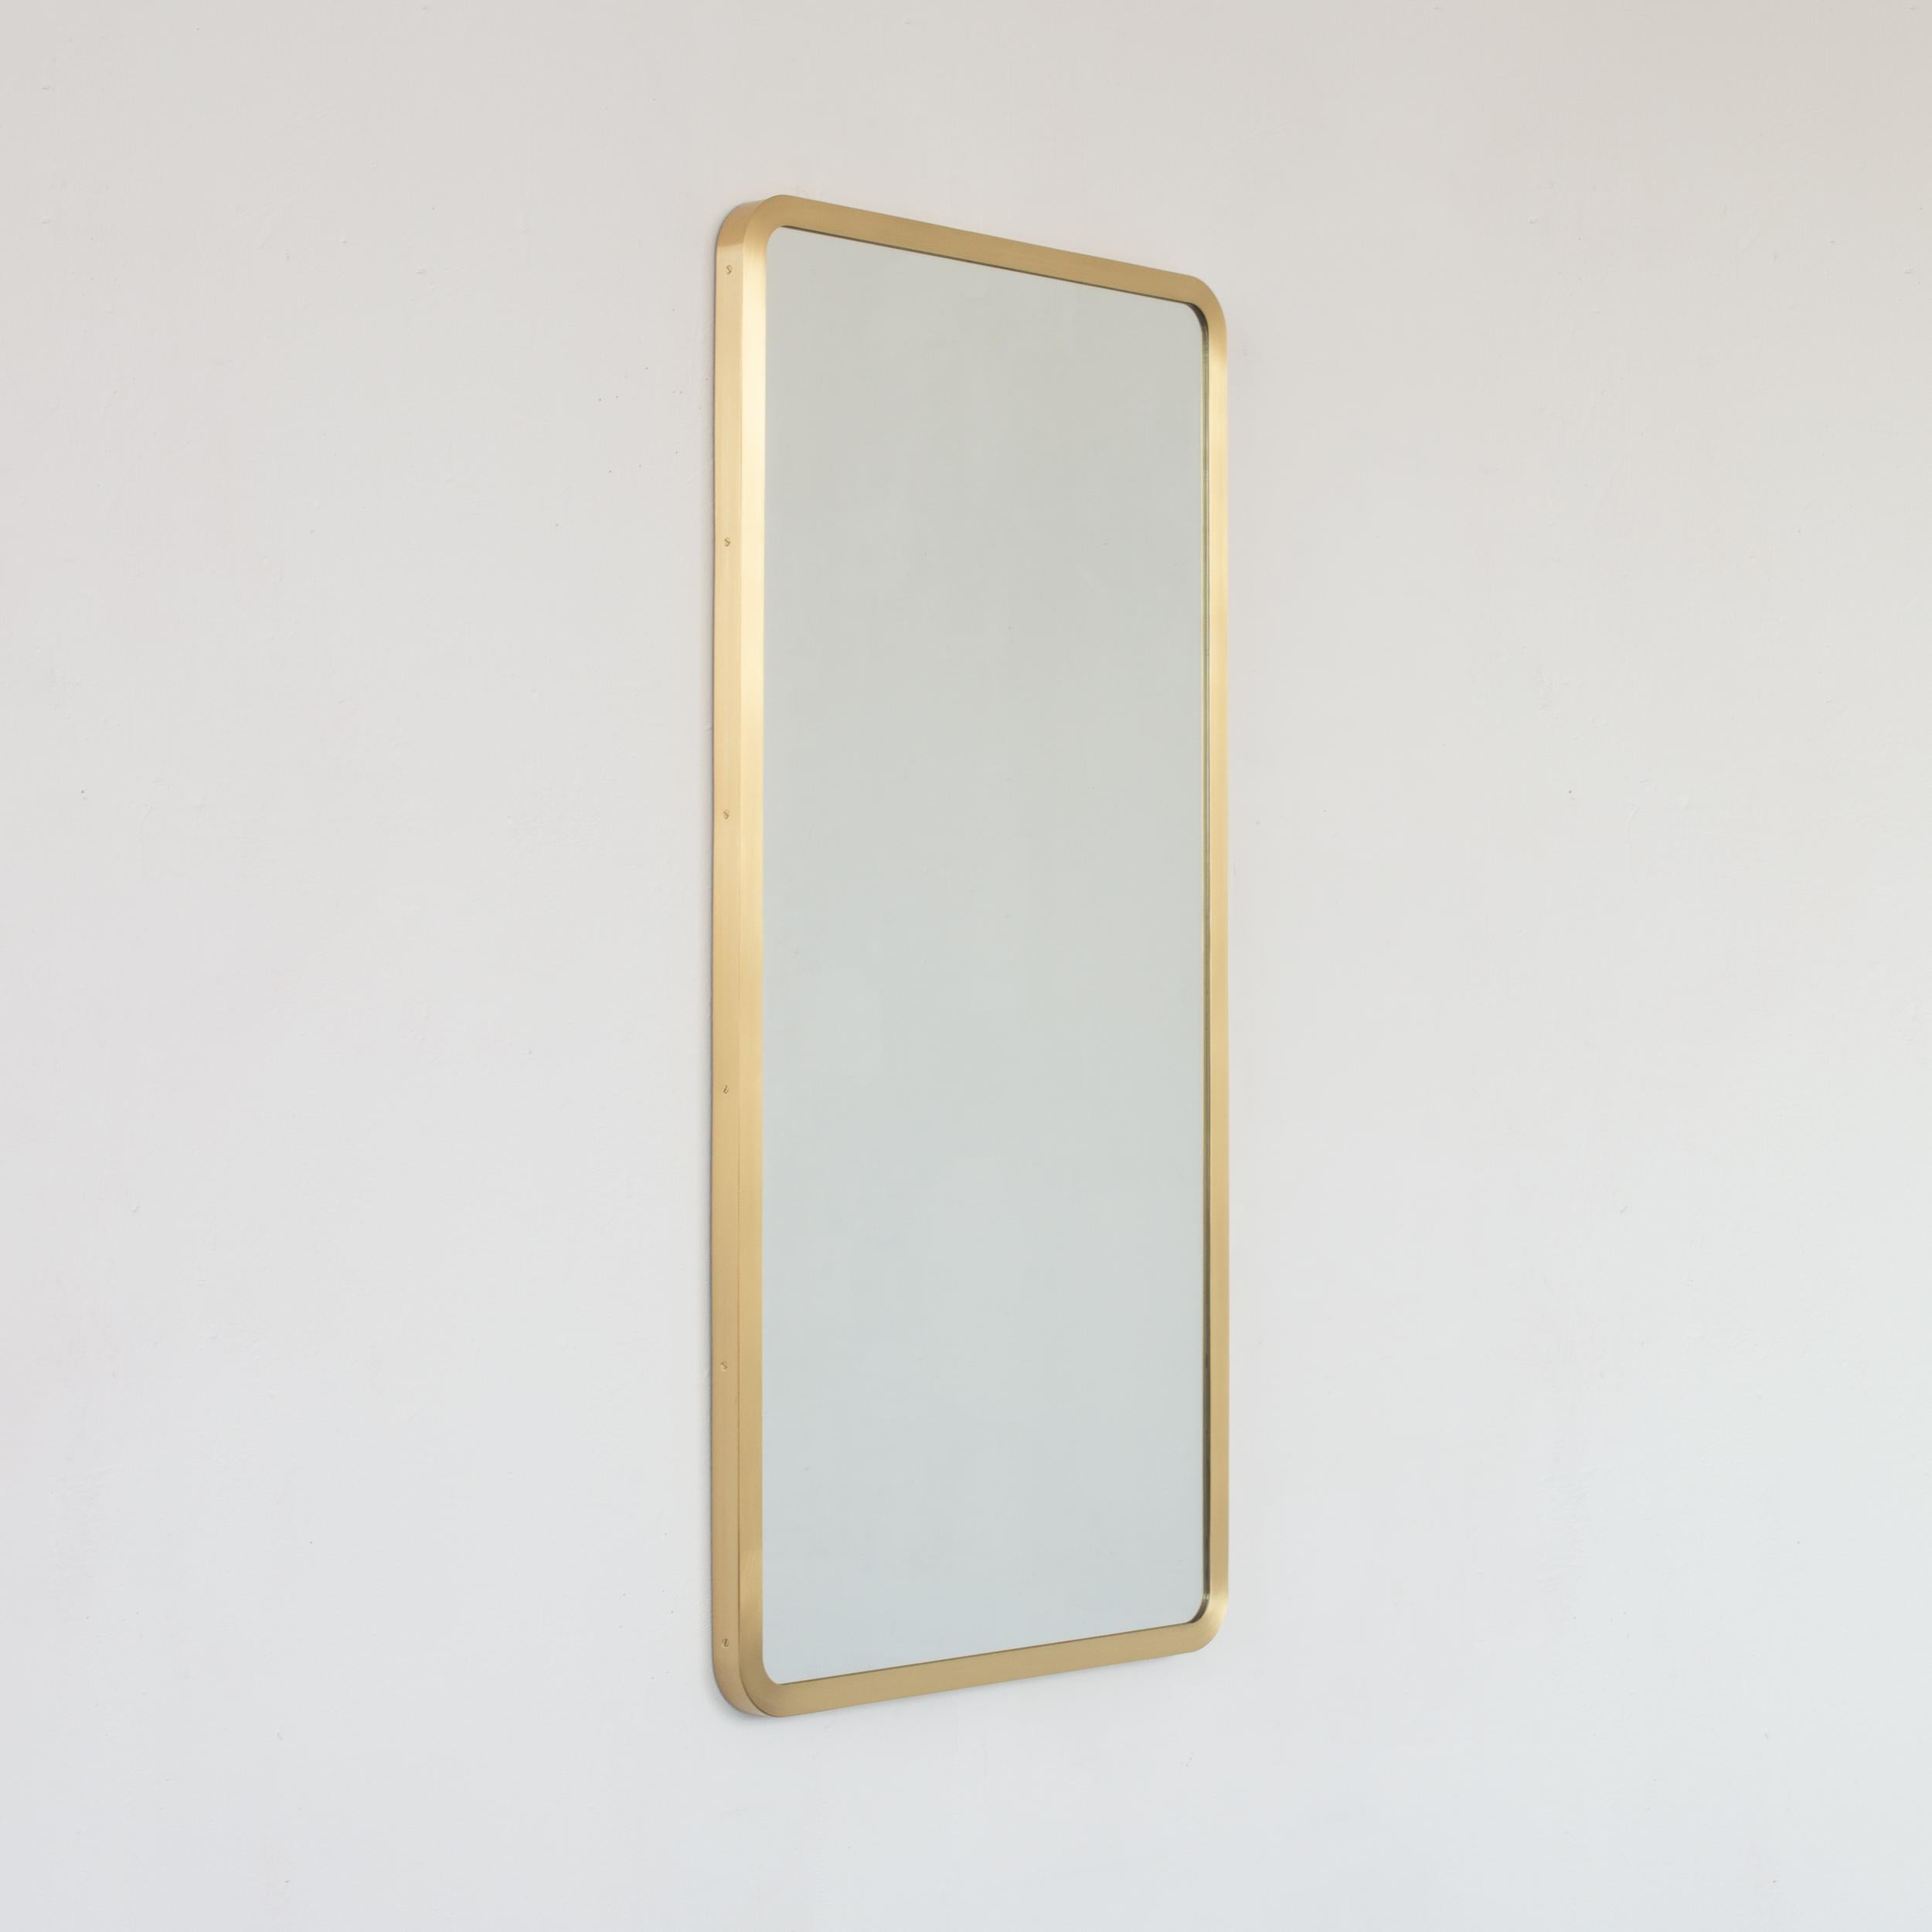 Quadris Rectangular Minimalist Mirror with a Brass Frame, Small